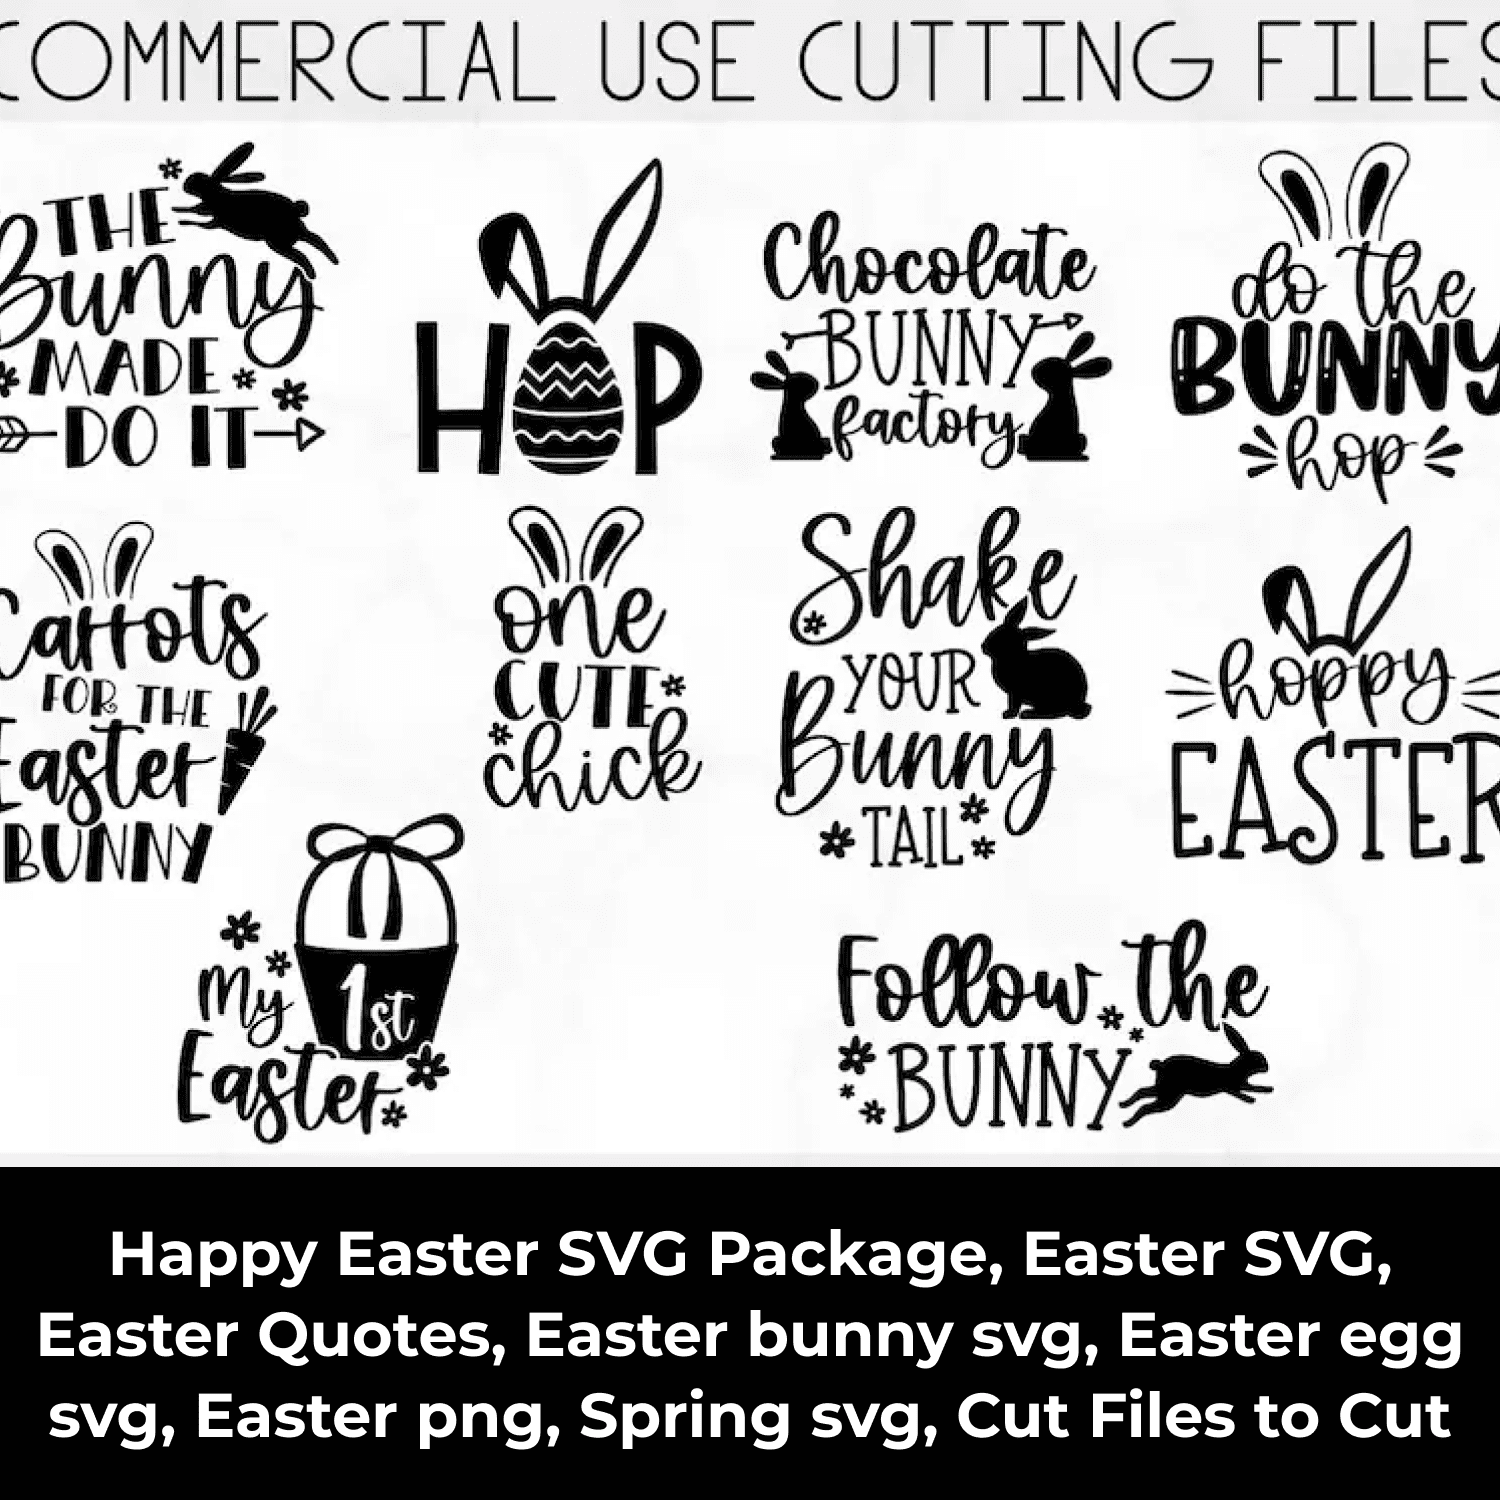 Happy Easter SVG Bundle cover.